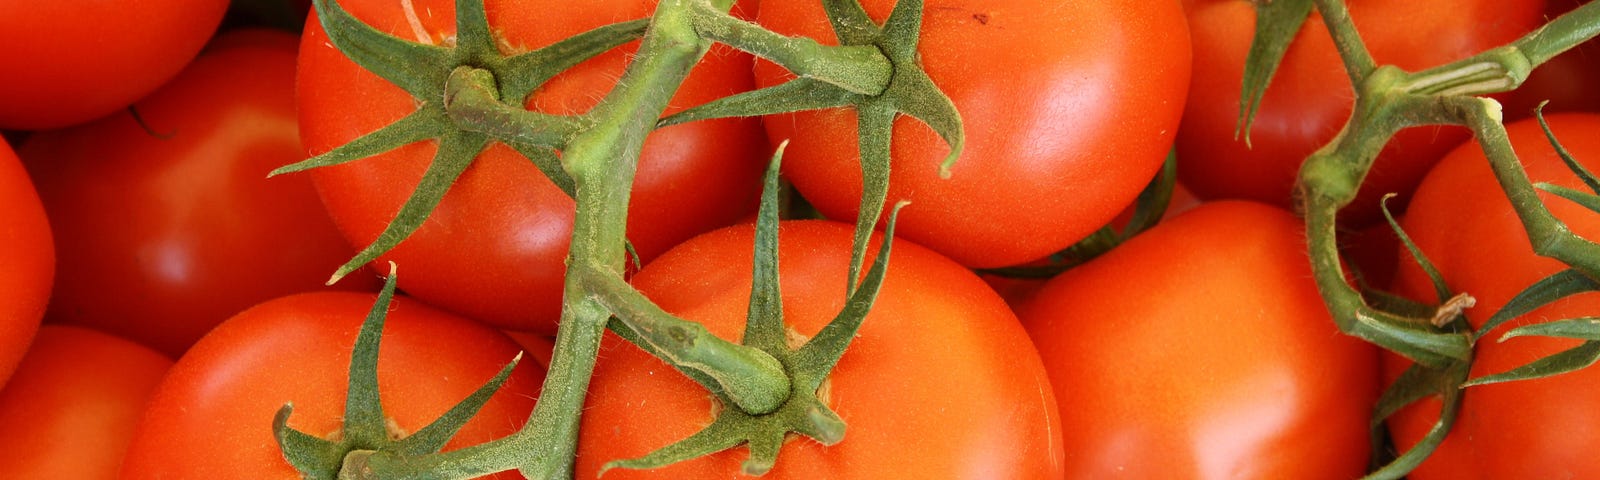 A close-up shot of ripe, reddish-orange tomatoes.